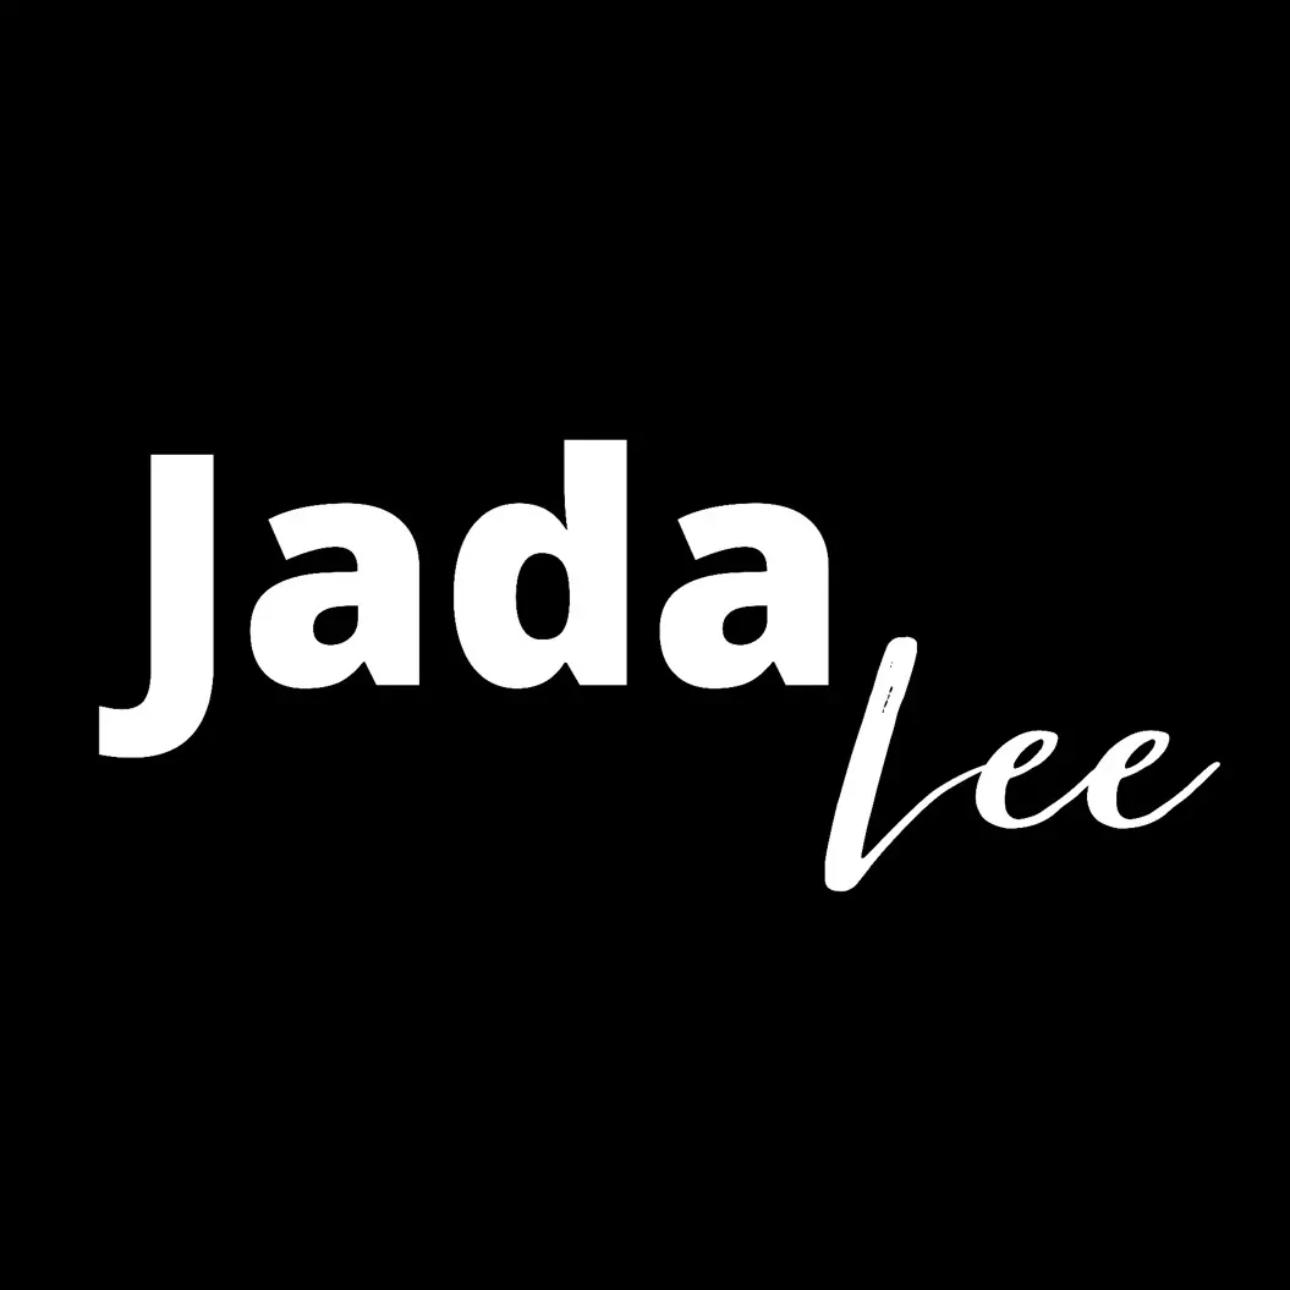 jada lee ♡'s images